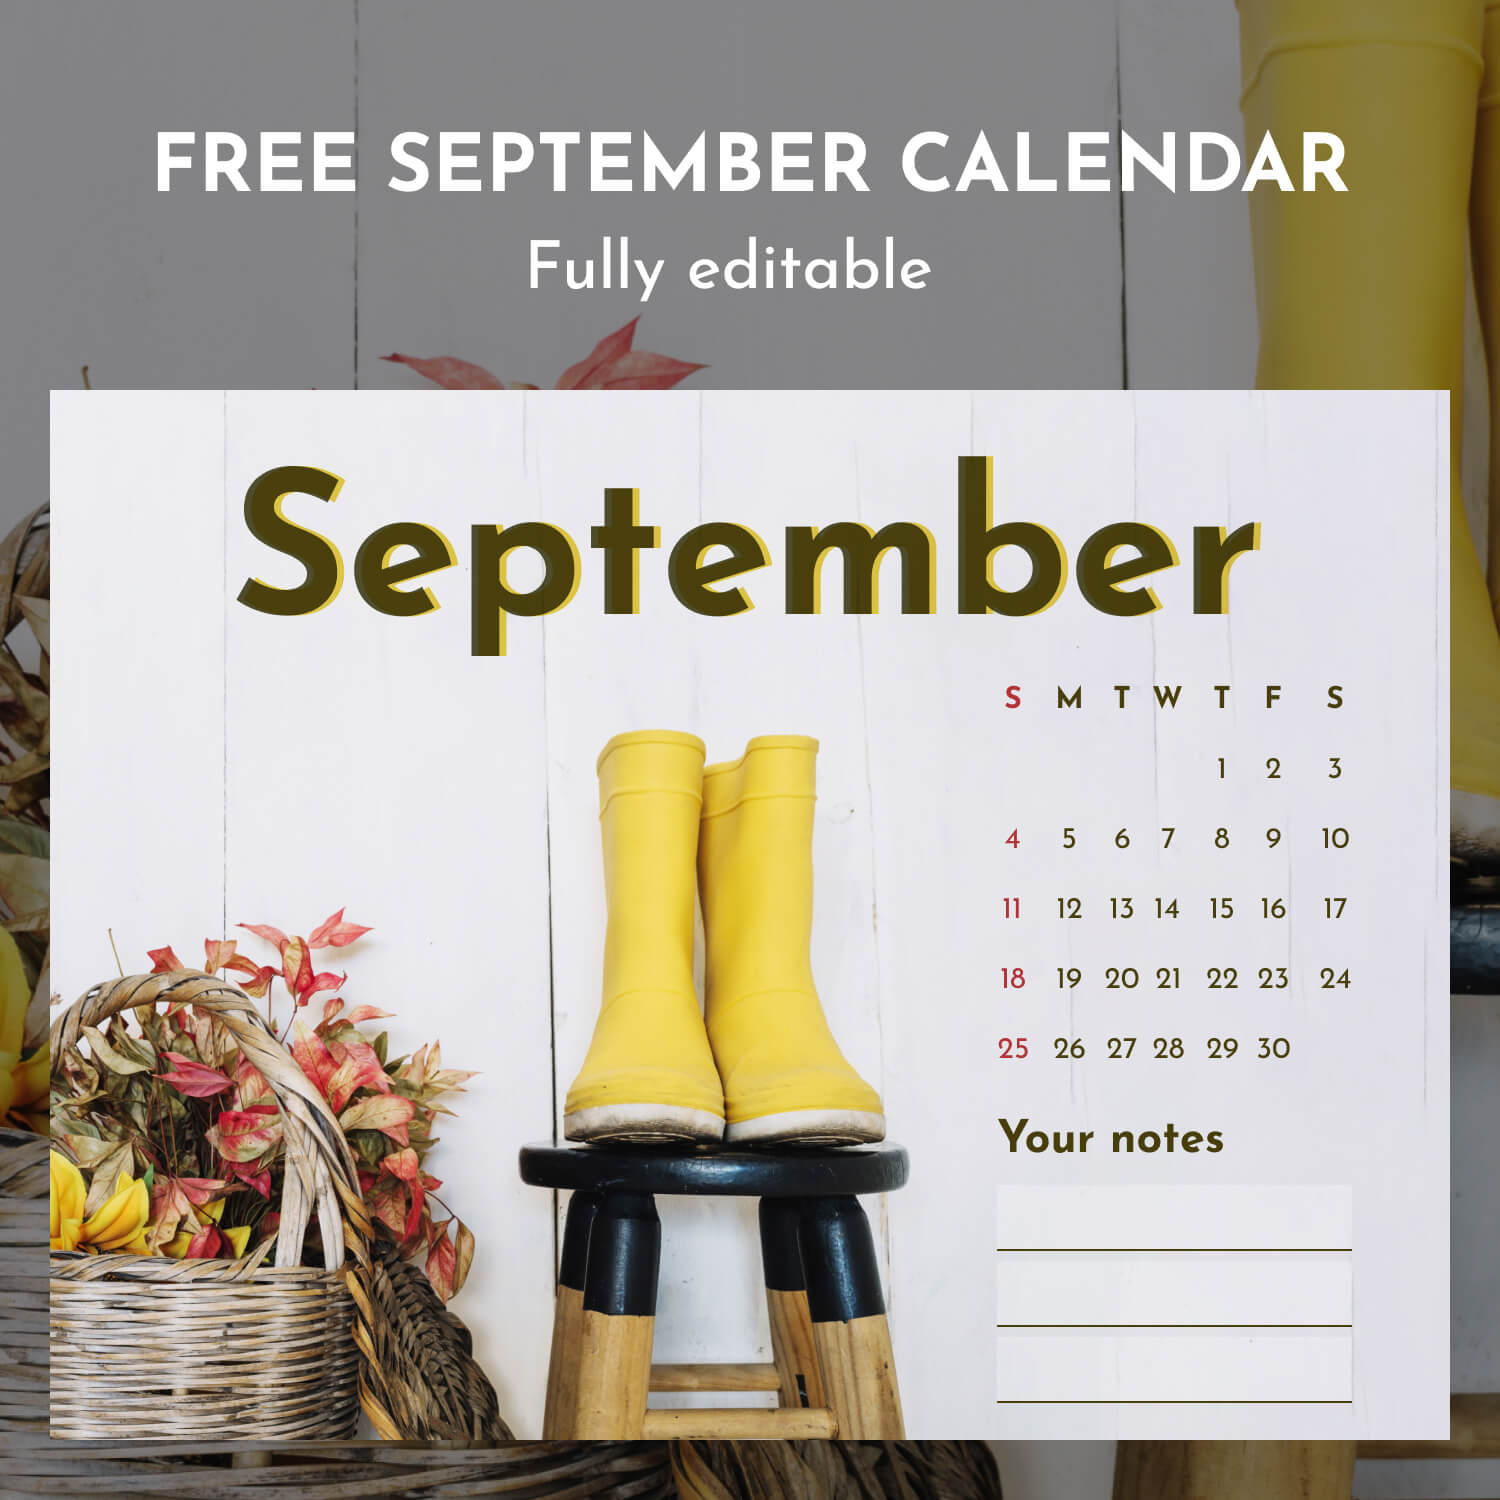 Free Editable Printable September Calendar Cover Image.